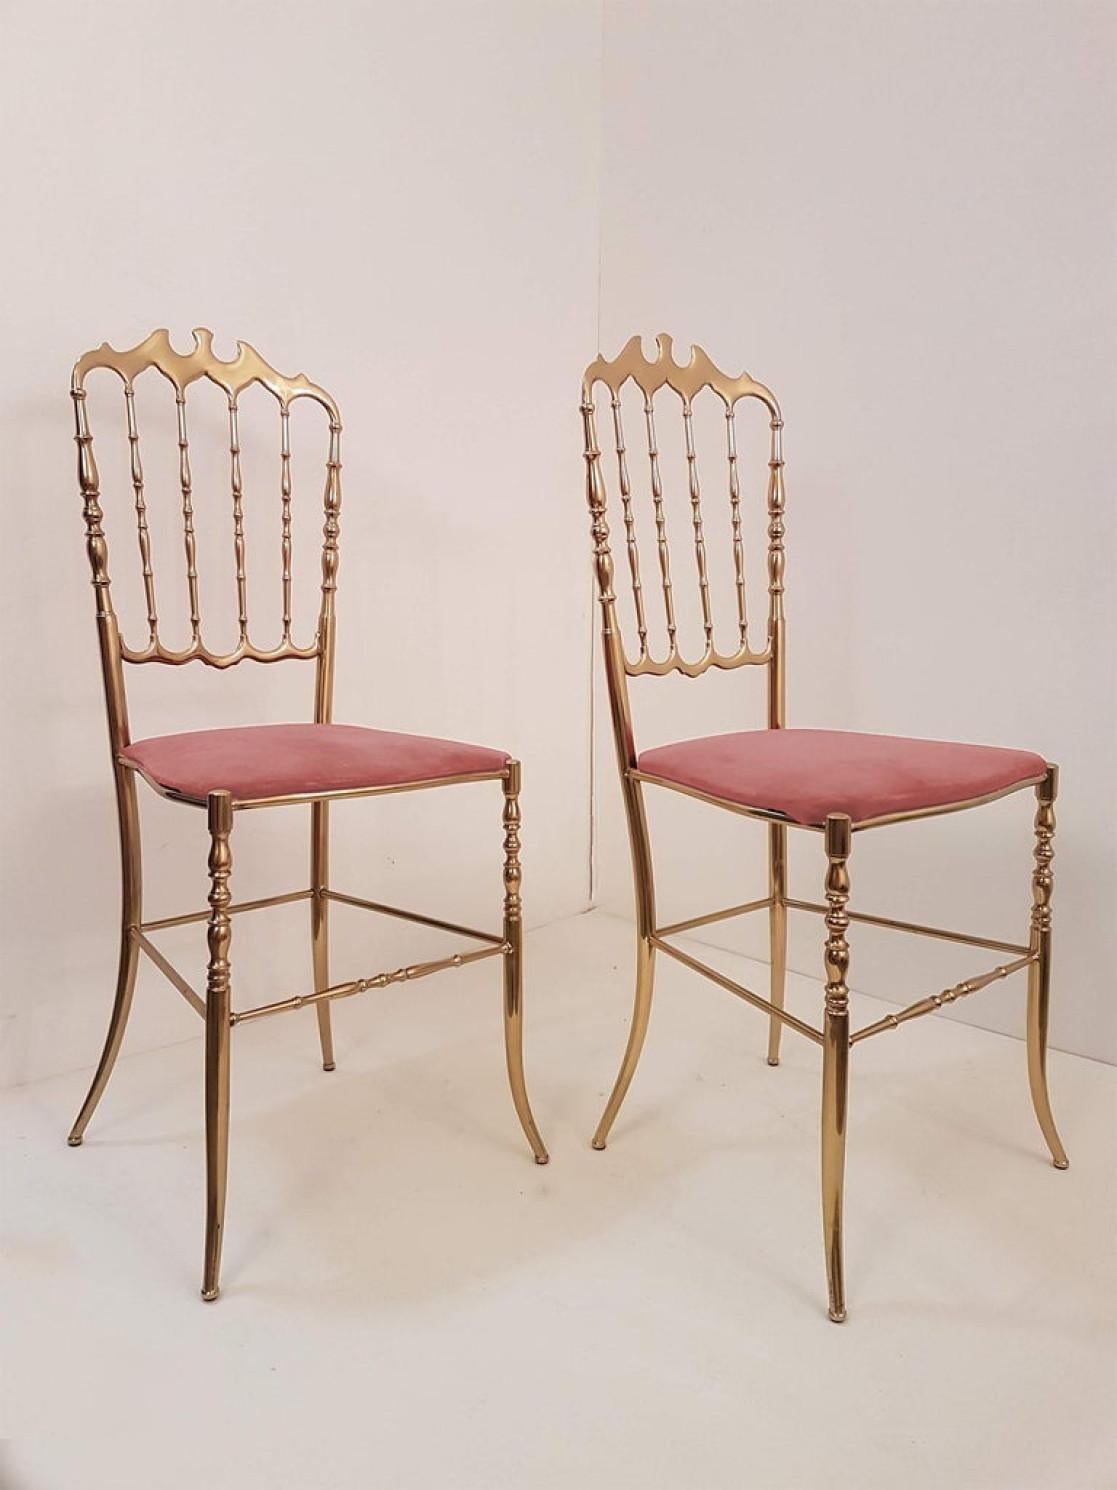 Pair of Italian Massive Brass Chairs by Chiavari, Upholstery Pink Velvet 3